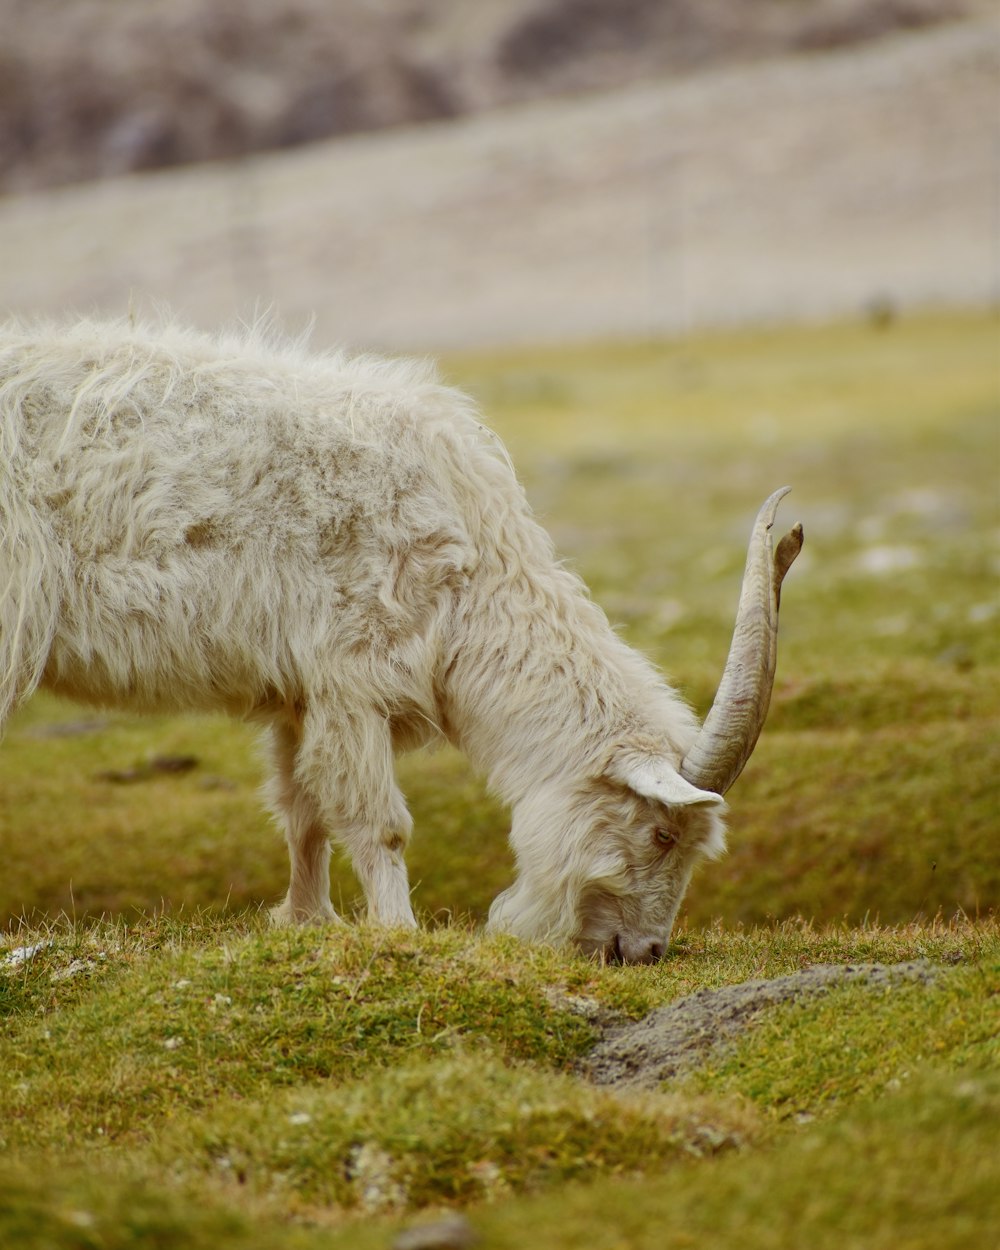 a long horn sheep grazing in a grassy field